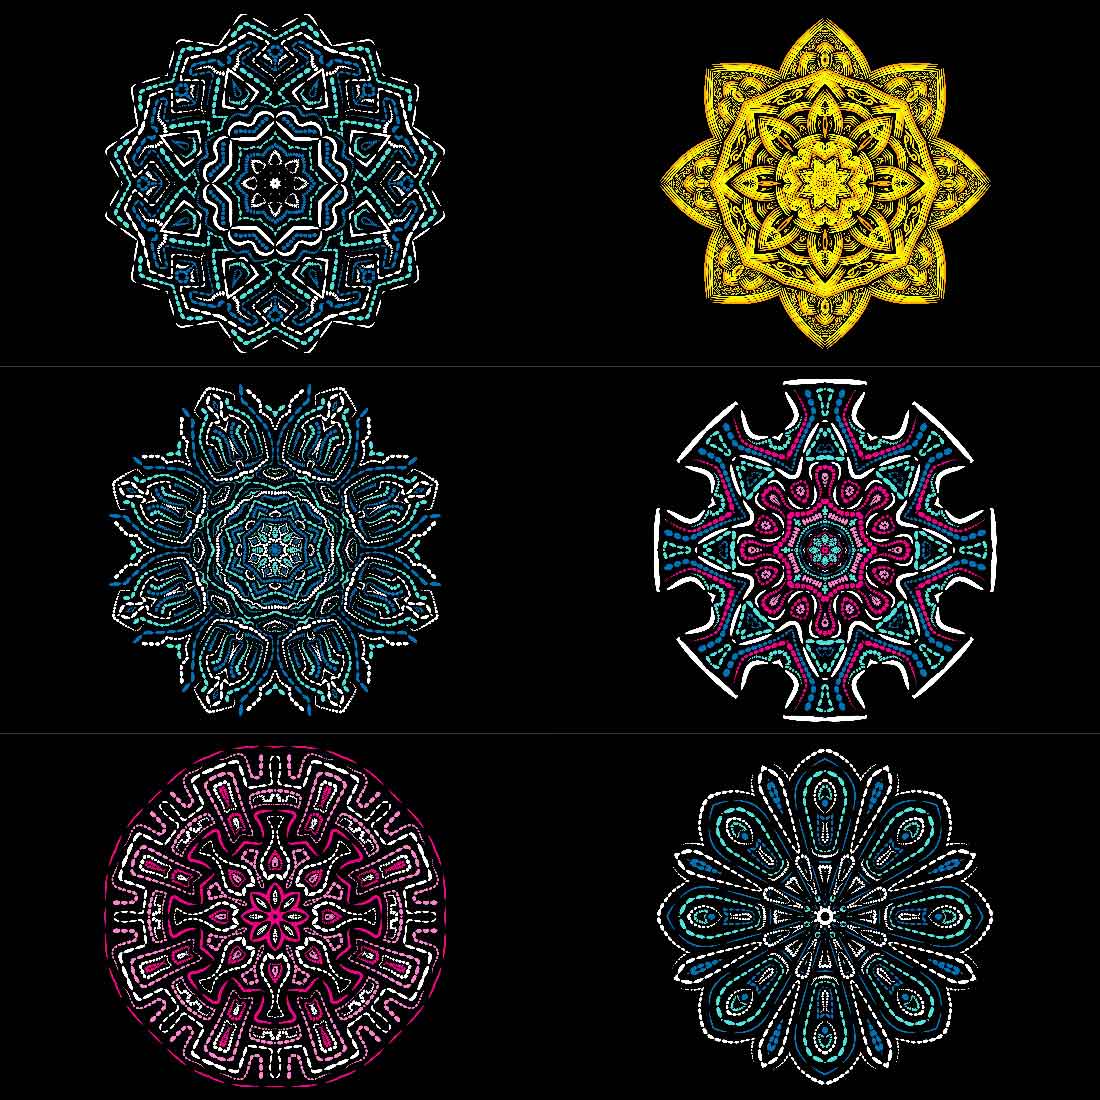 Pack of adorable images of geometric mandalas